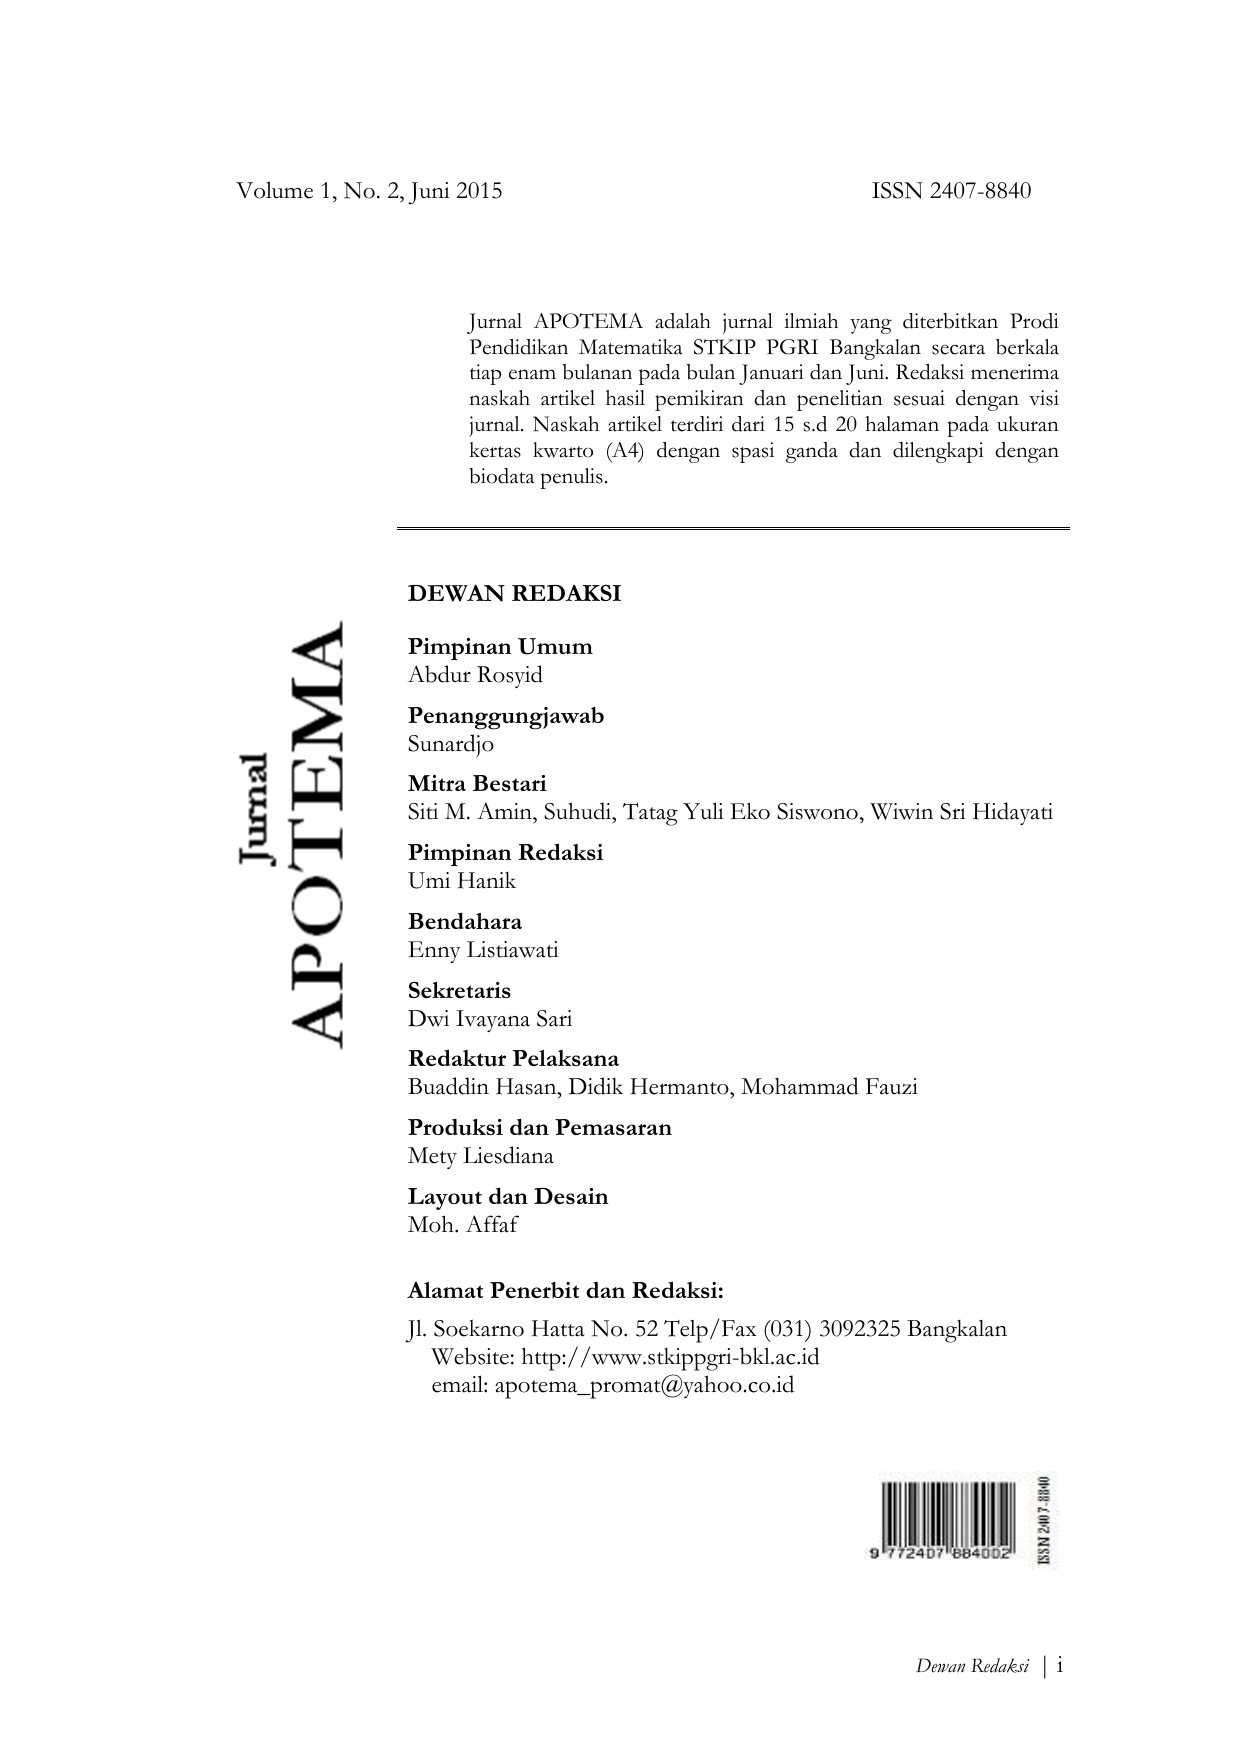 Volume 1 No 2 Juni 2015 ISSN 2407 8840 Jurnal APOTEMA adalah jurnal ilmiah yang diterbitkan Prodi Pendidikan Matematika STKIP PGRI Bangkalan secara